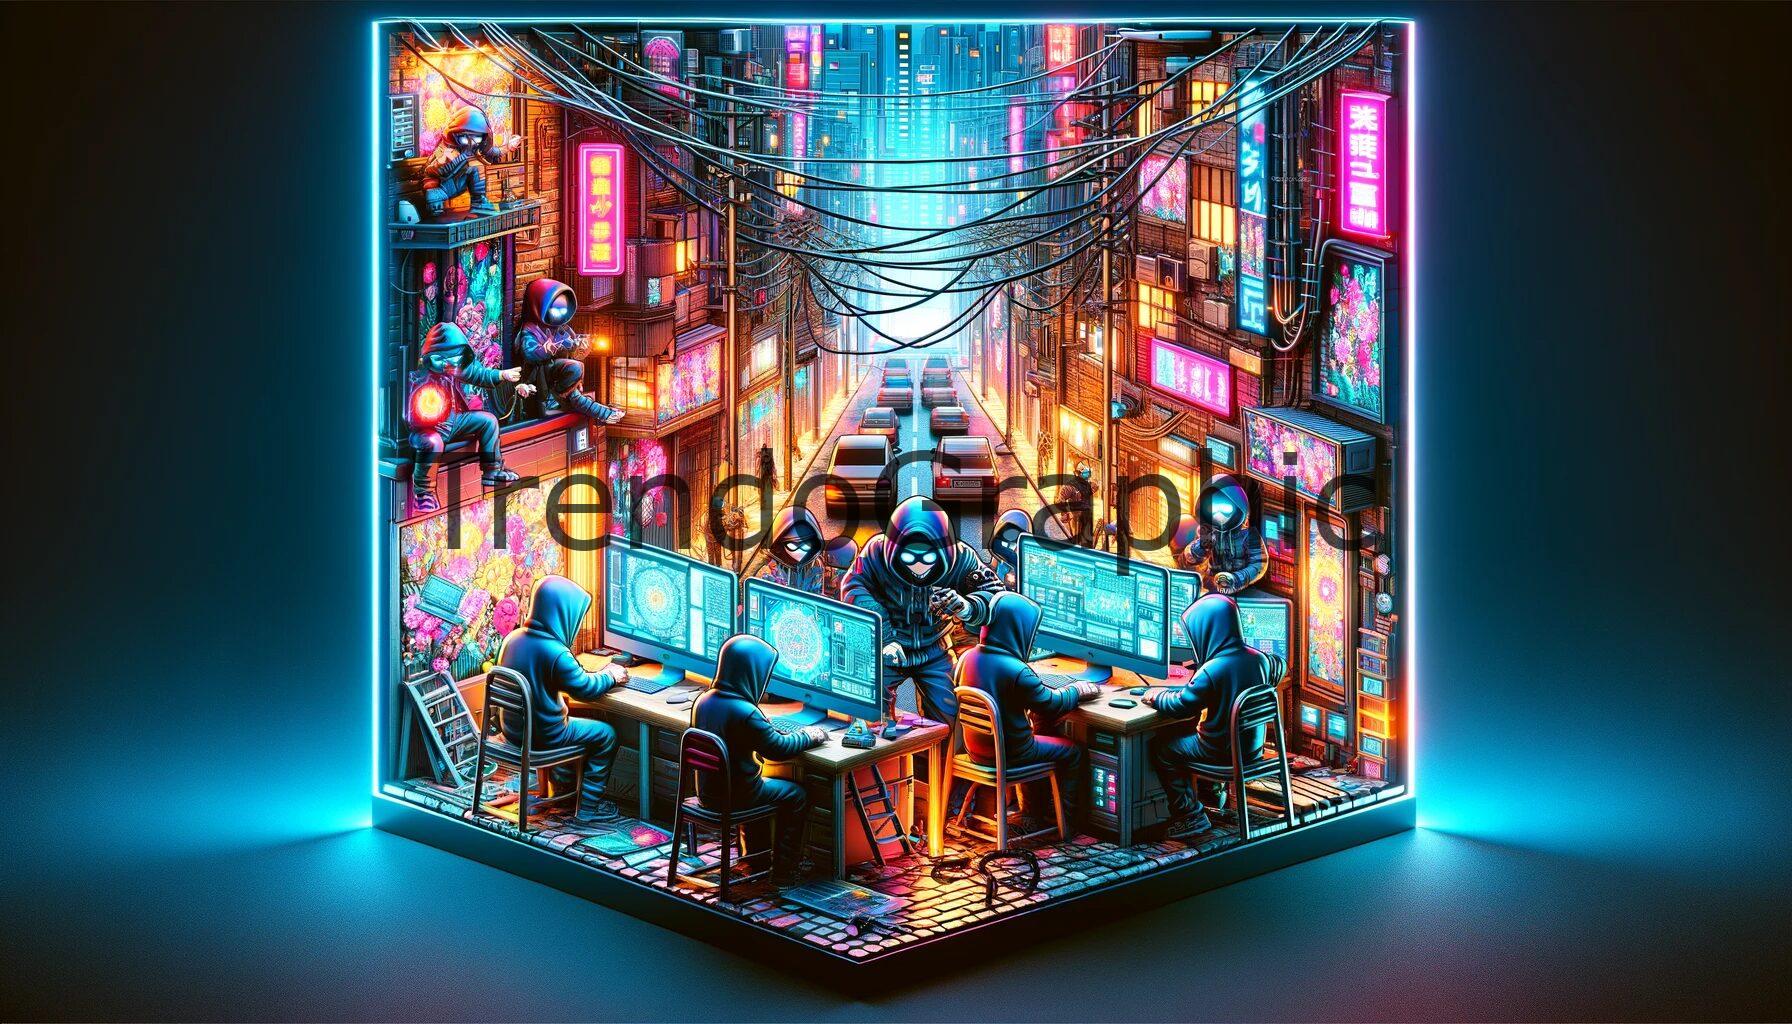 Futuristic Cyberpunk Anime Scene: Hackers in a Neon-Lit City